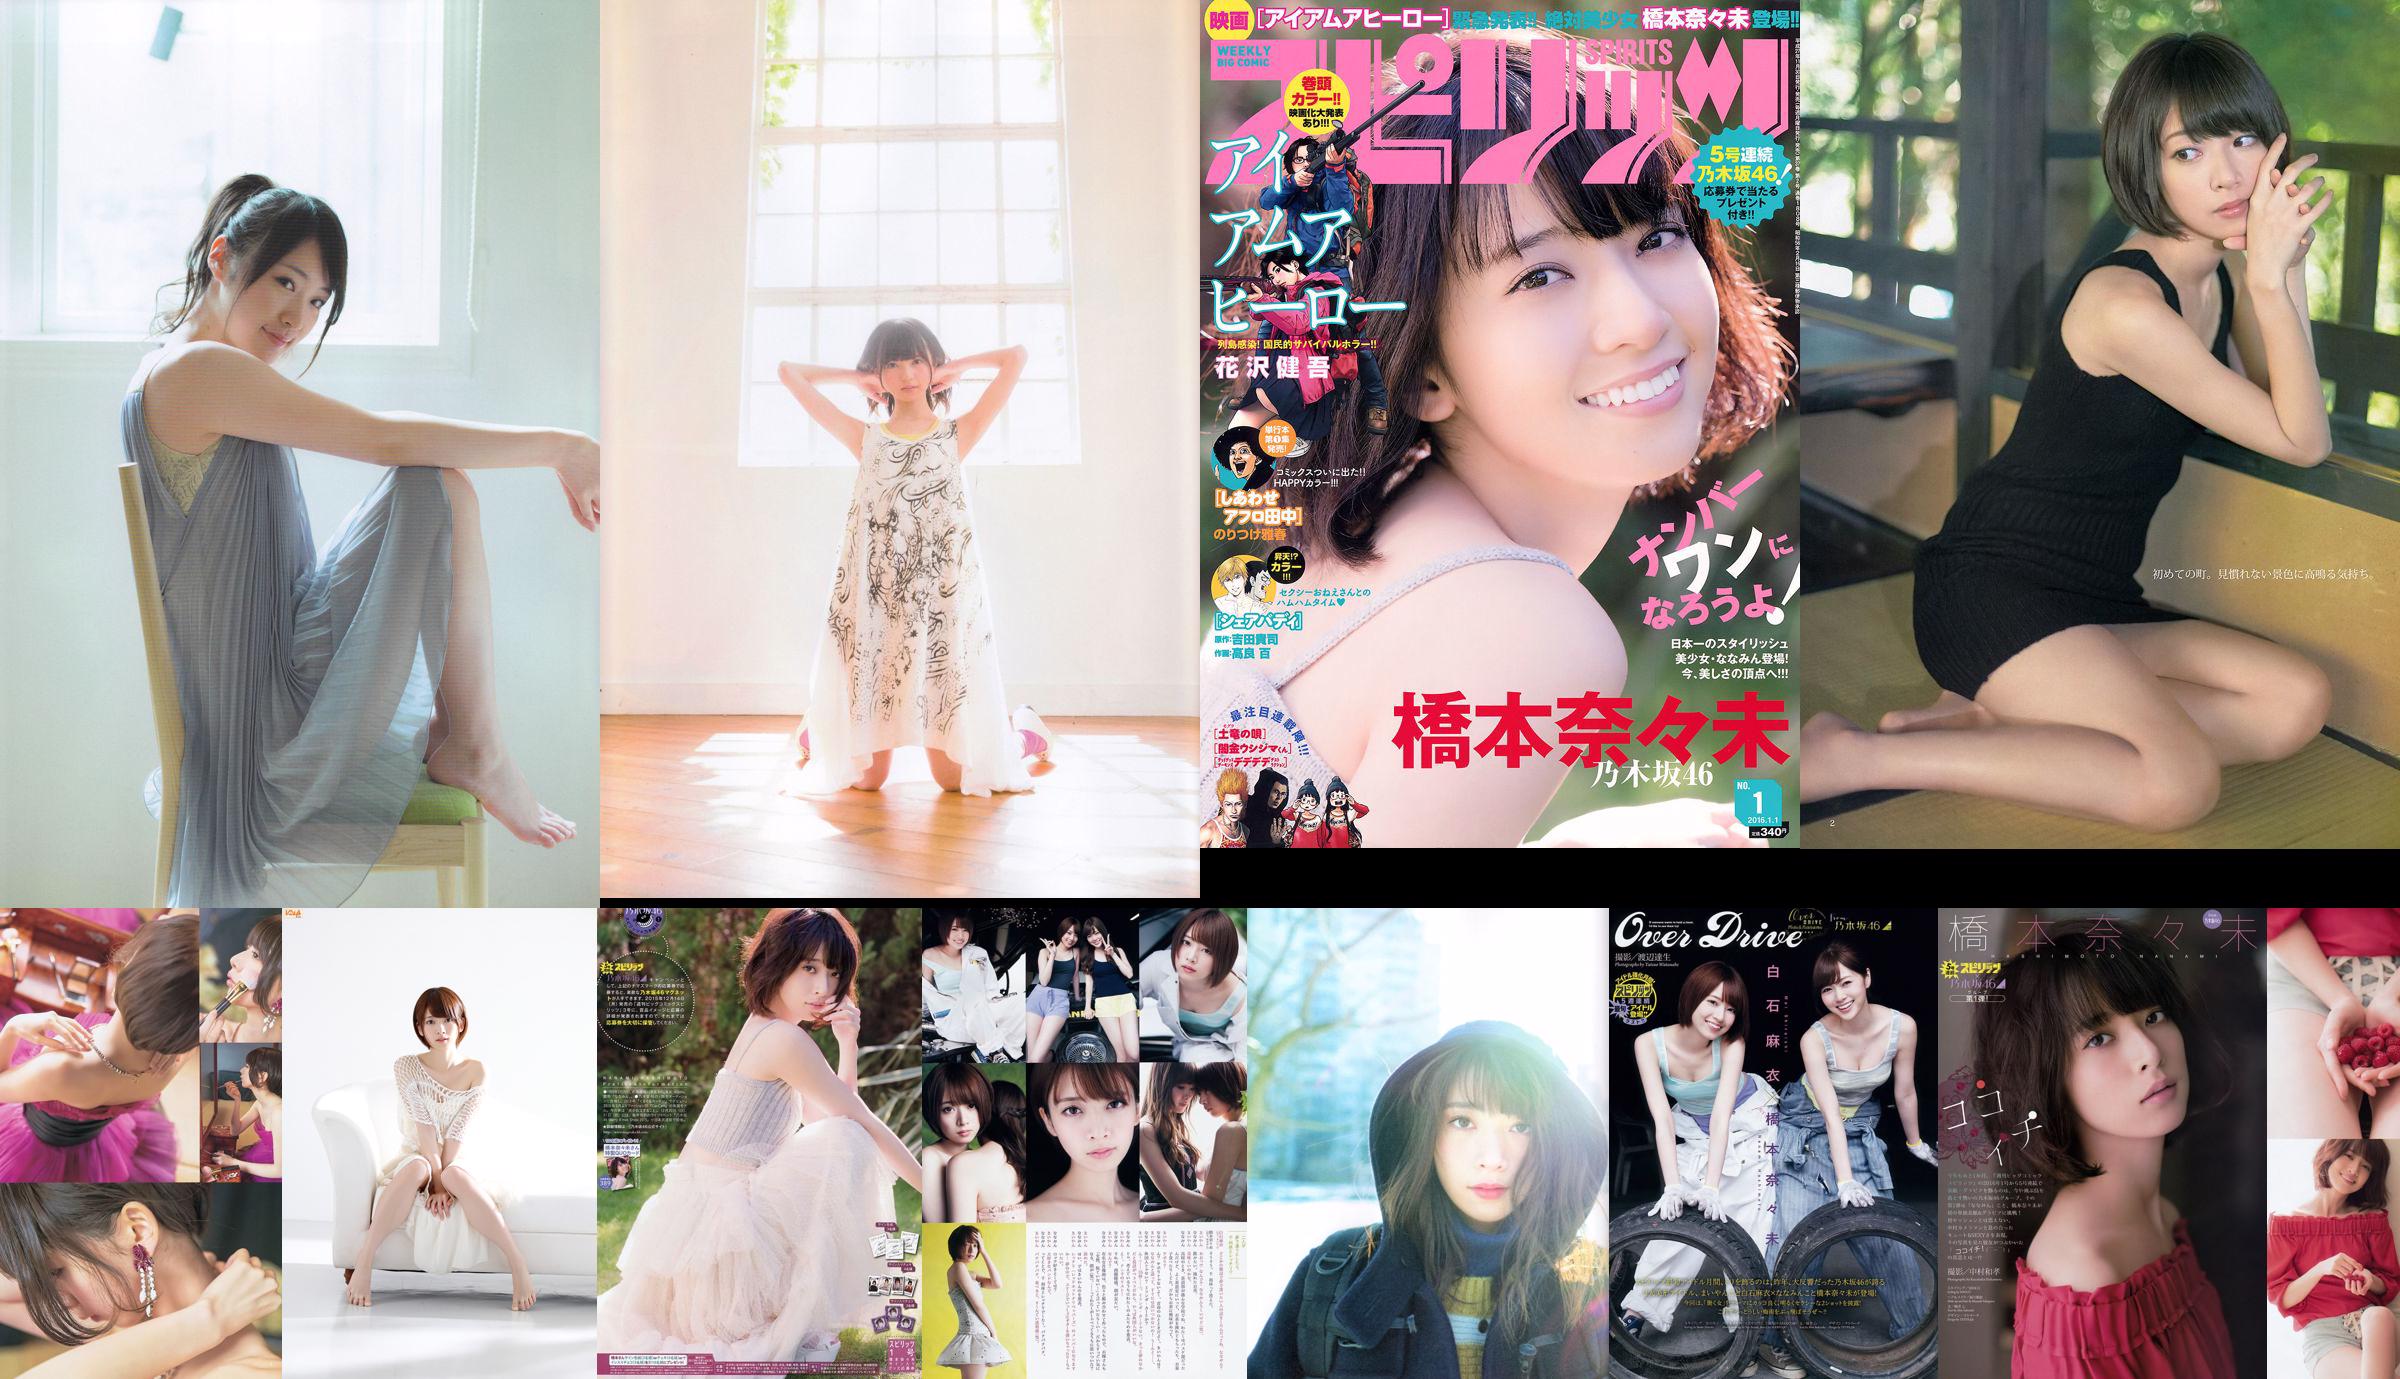 Нанами Хашимото (участник Nogizaka 46) [Bomb.TV] июнь 2013 г. No.4954b0 Страница 1